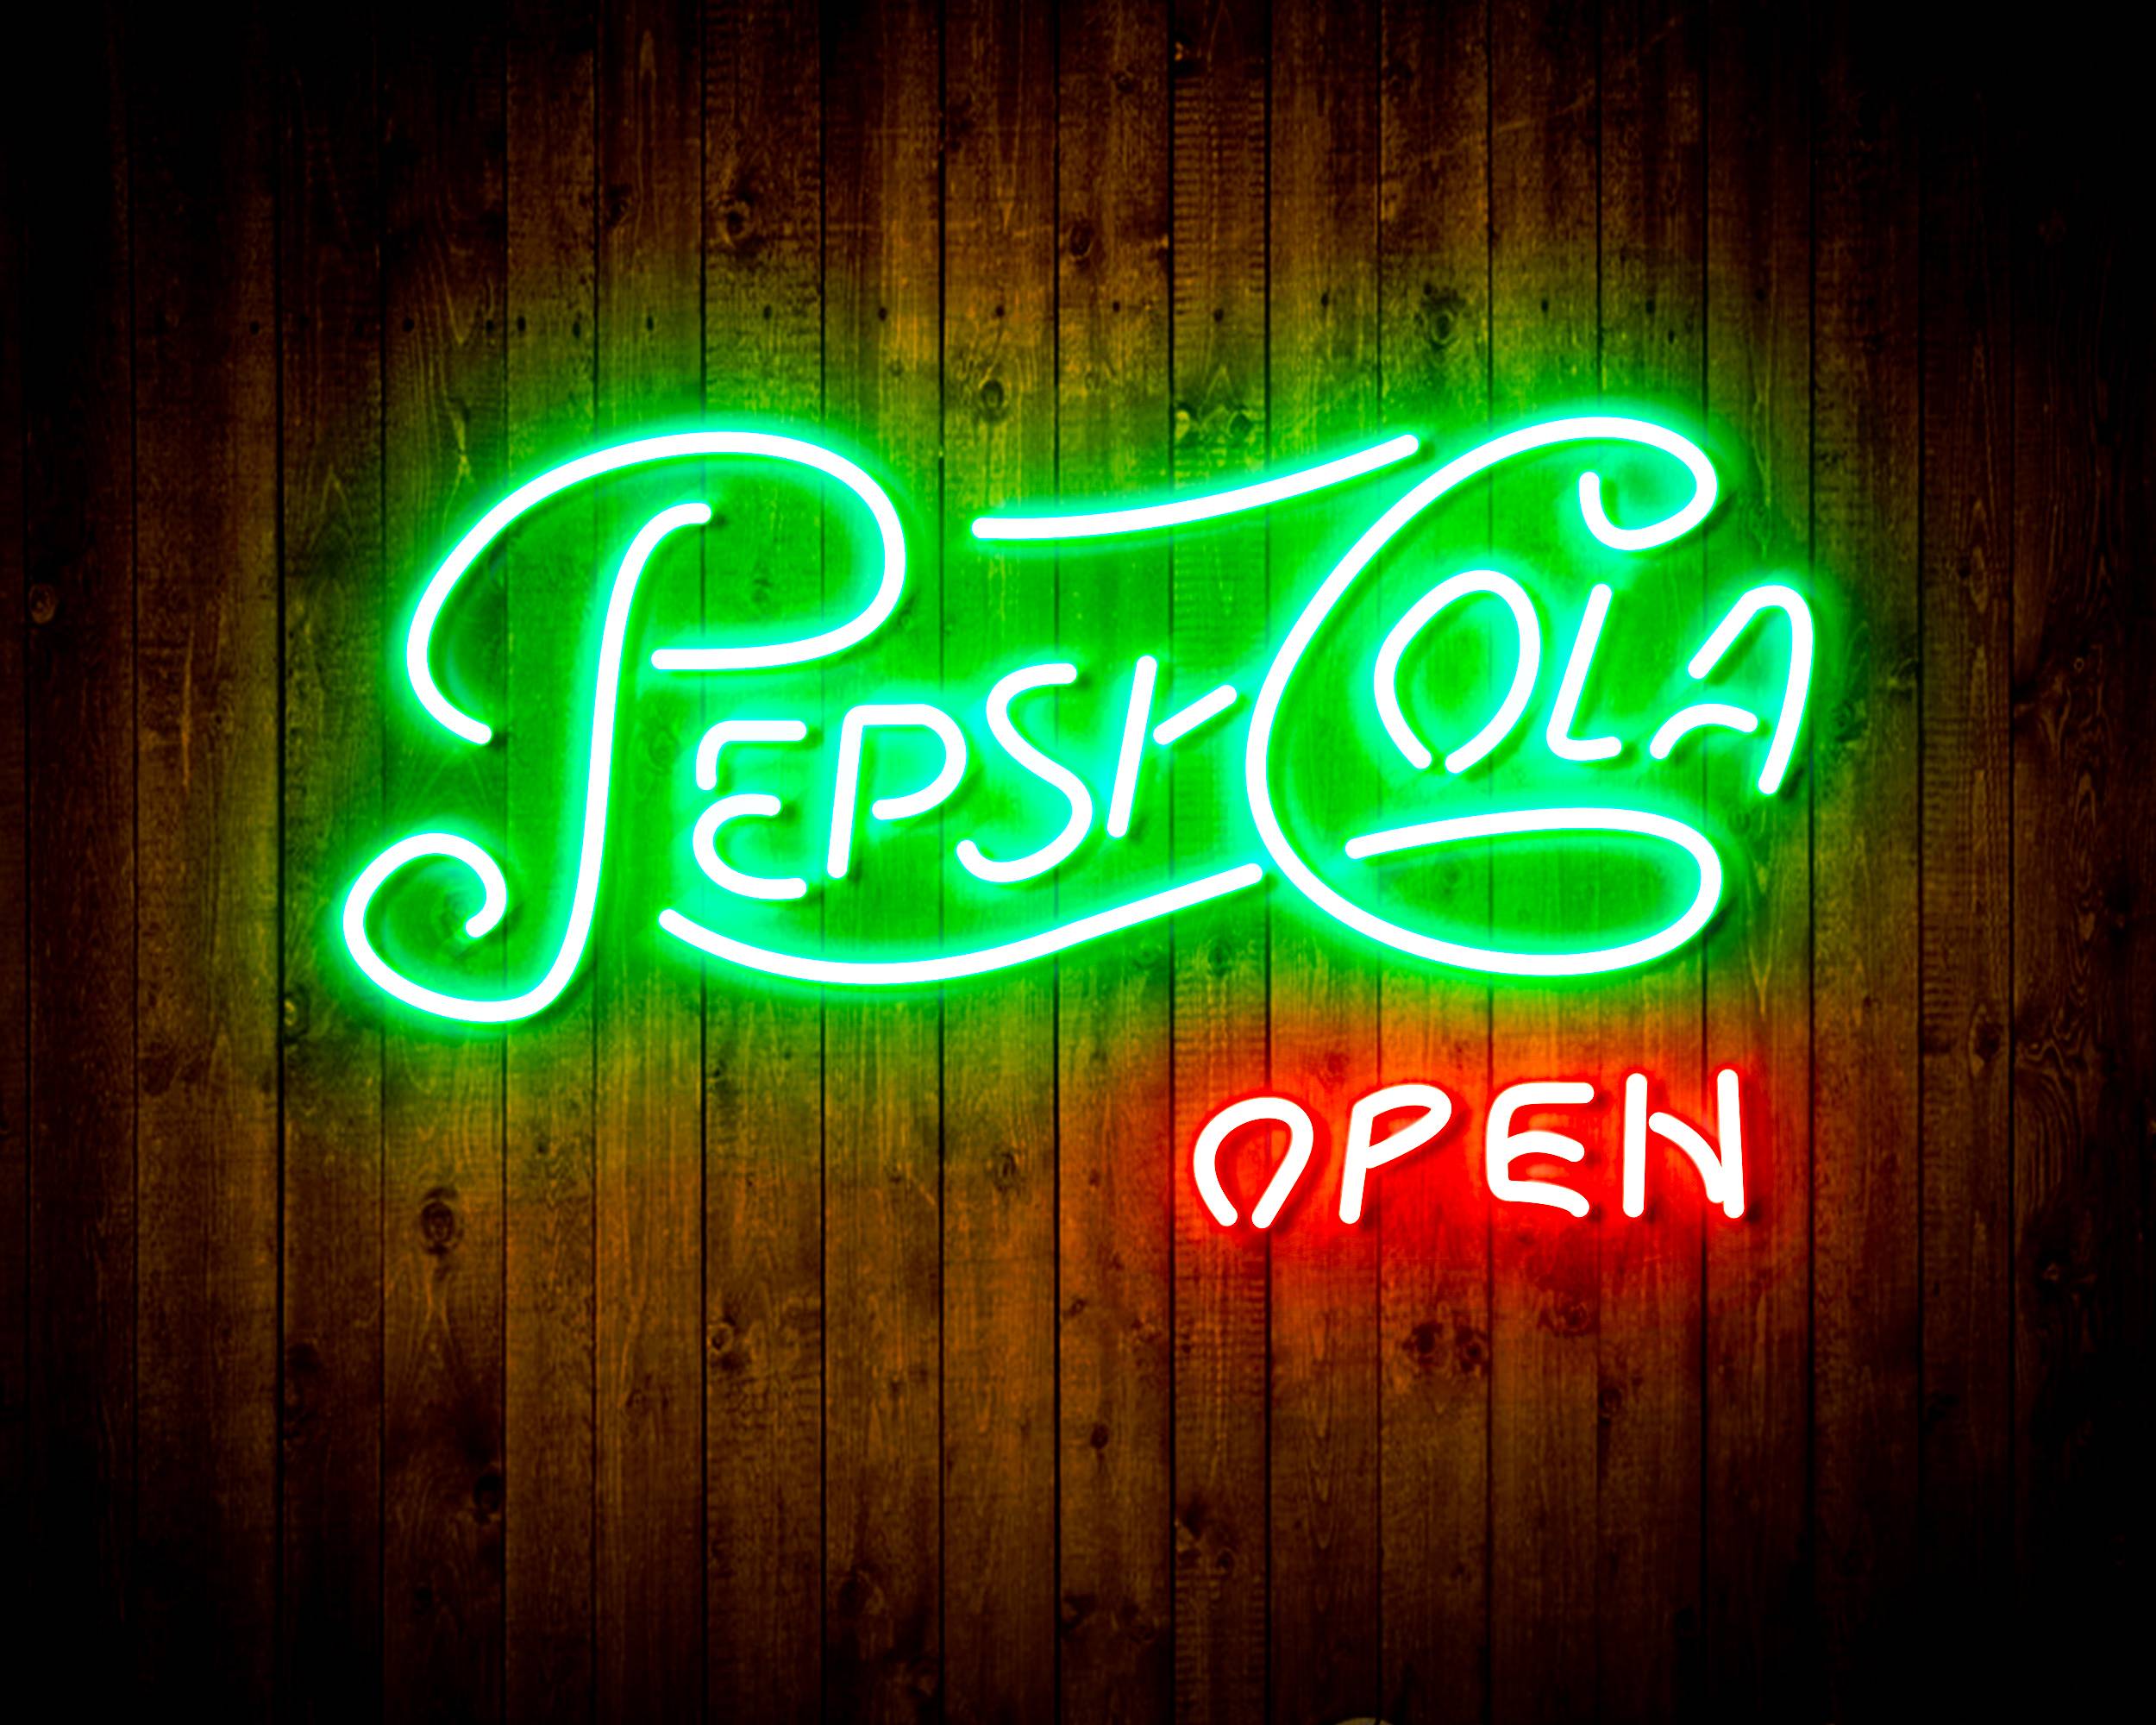 Pepsi Cola Open Sign Handmade LED Neon Light Sign